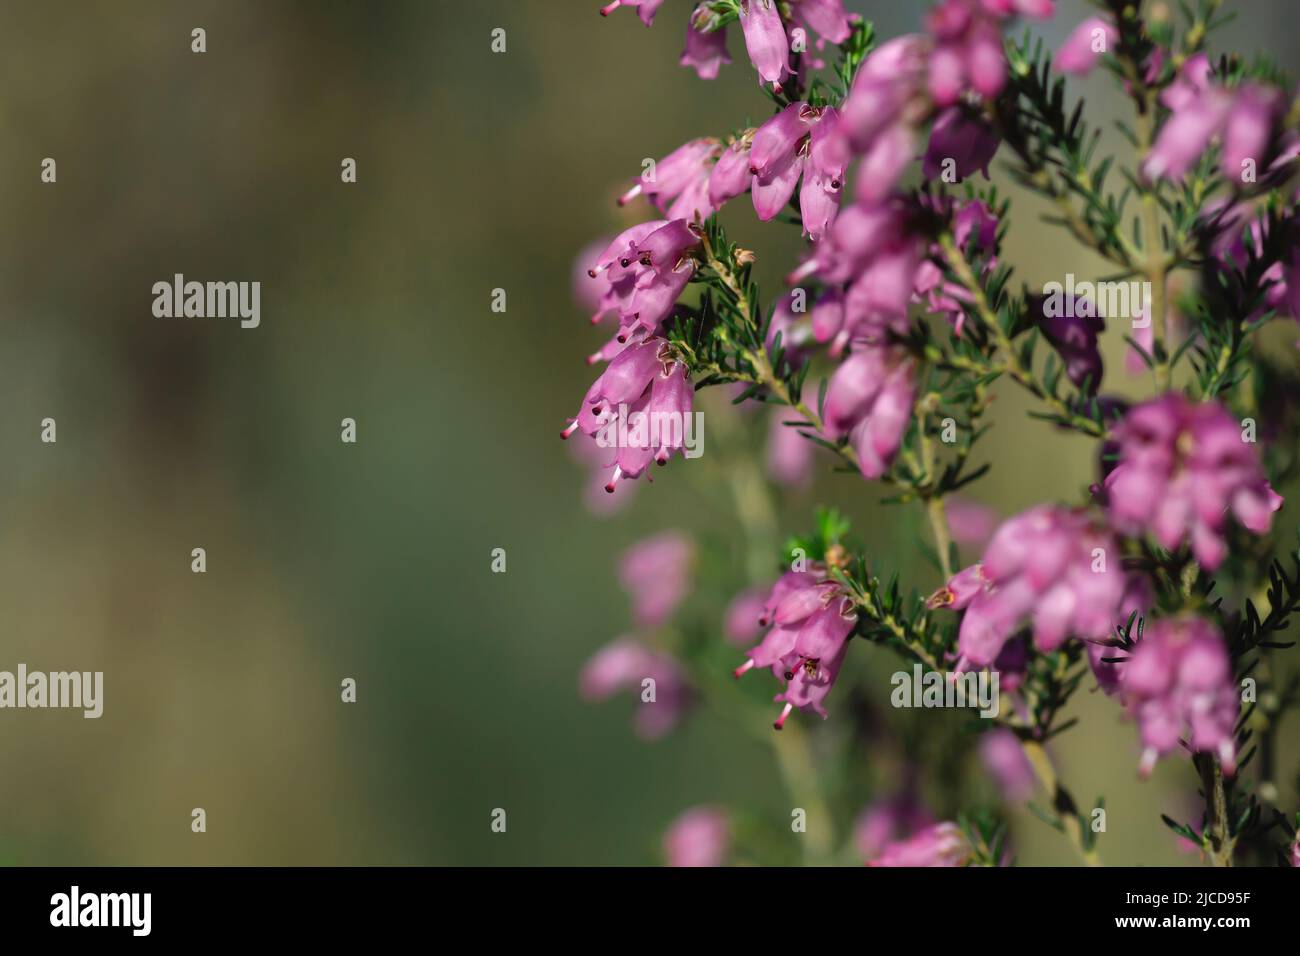 Detail of irish heath - Erica Erigenea - pink flowers blooming in spring Stock Photo